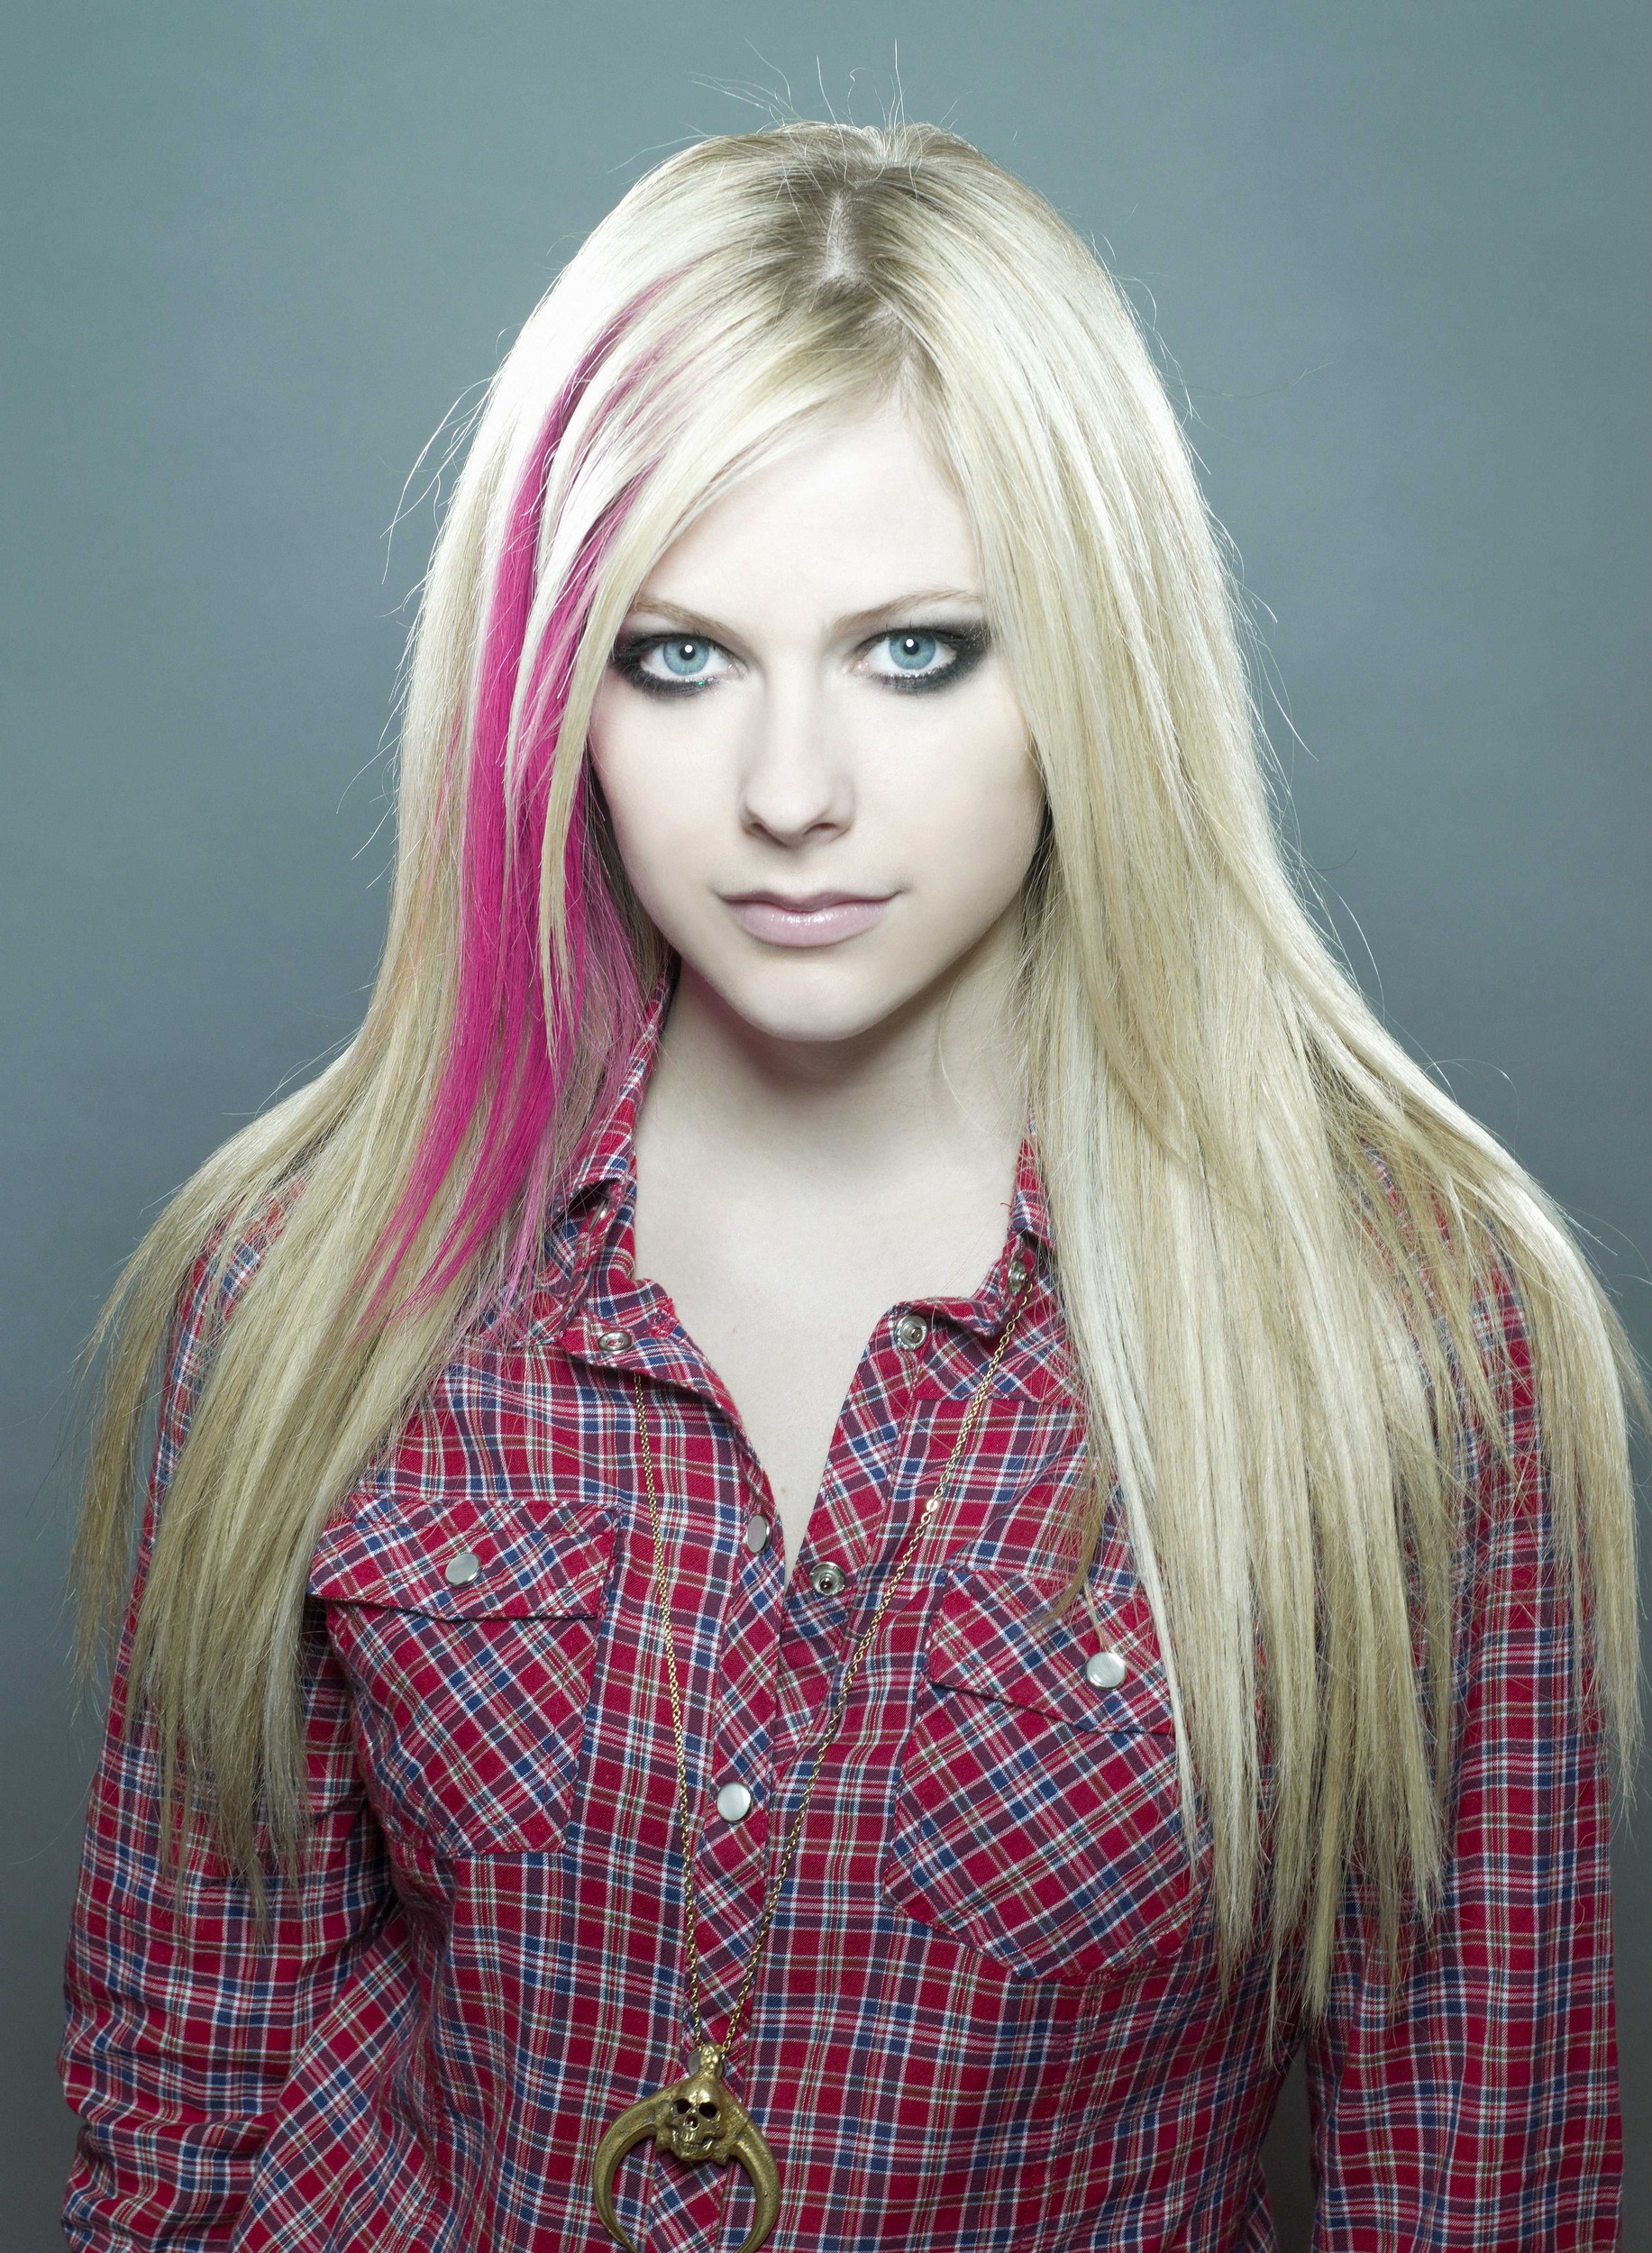 Avril Lavigne Photo 279 Of 1268 Pics Wallpaper Photo 91849